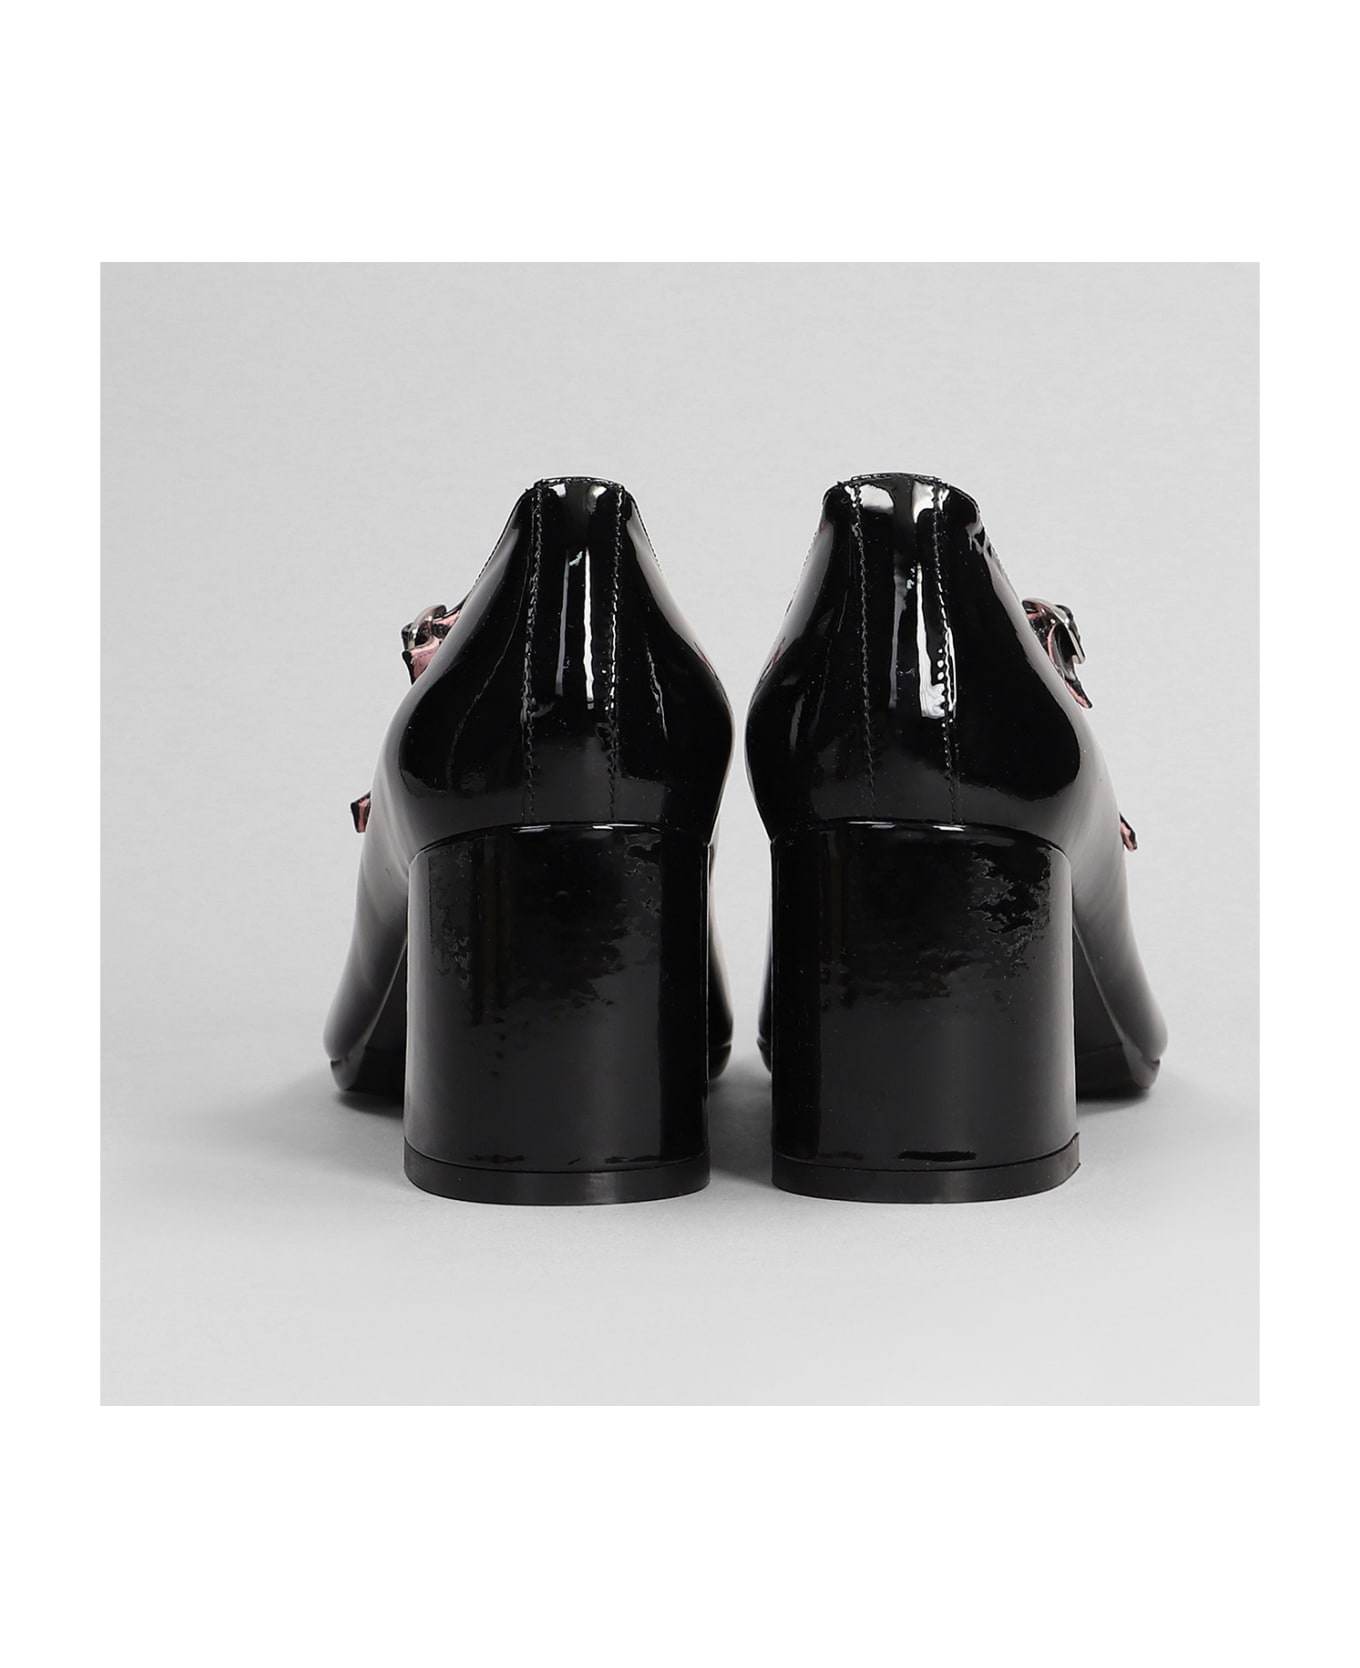 Carel Alice Pumps In Black Patent Leather - Vernis Noir